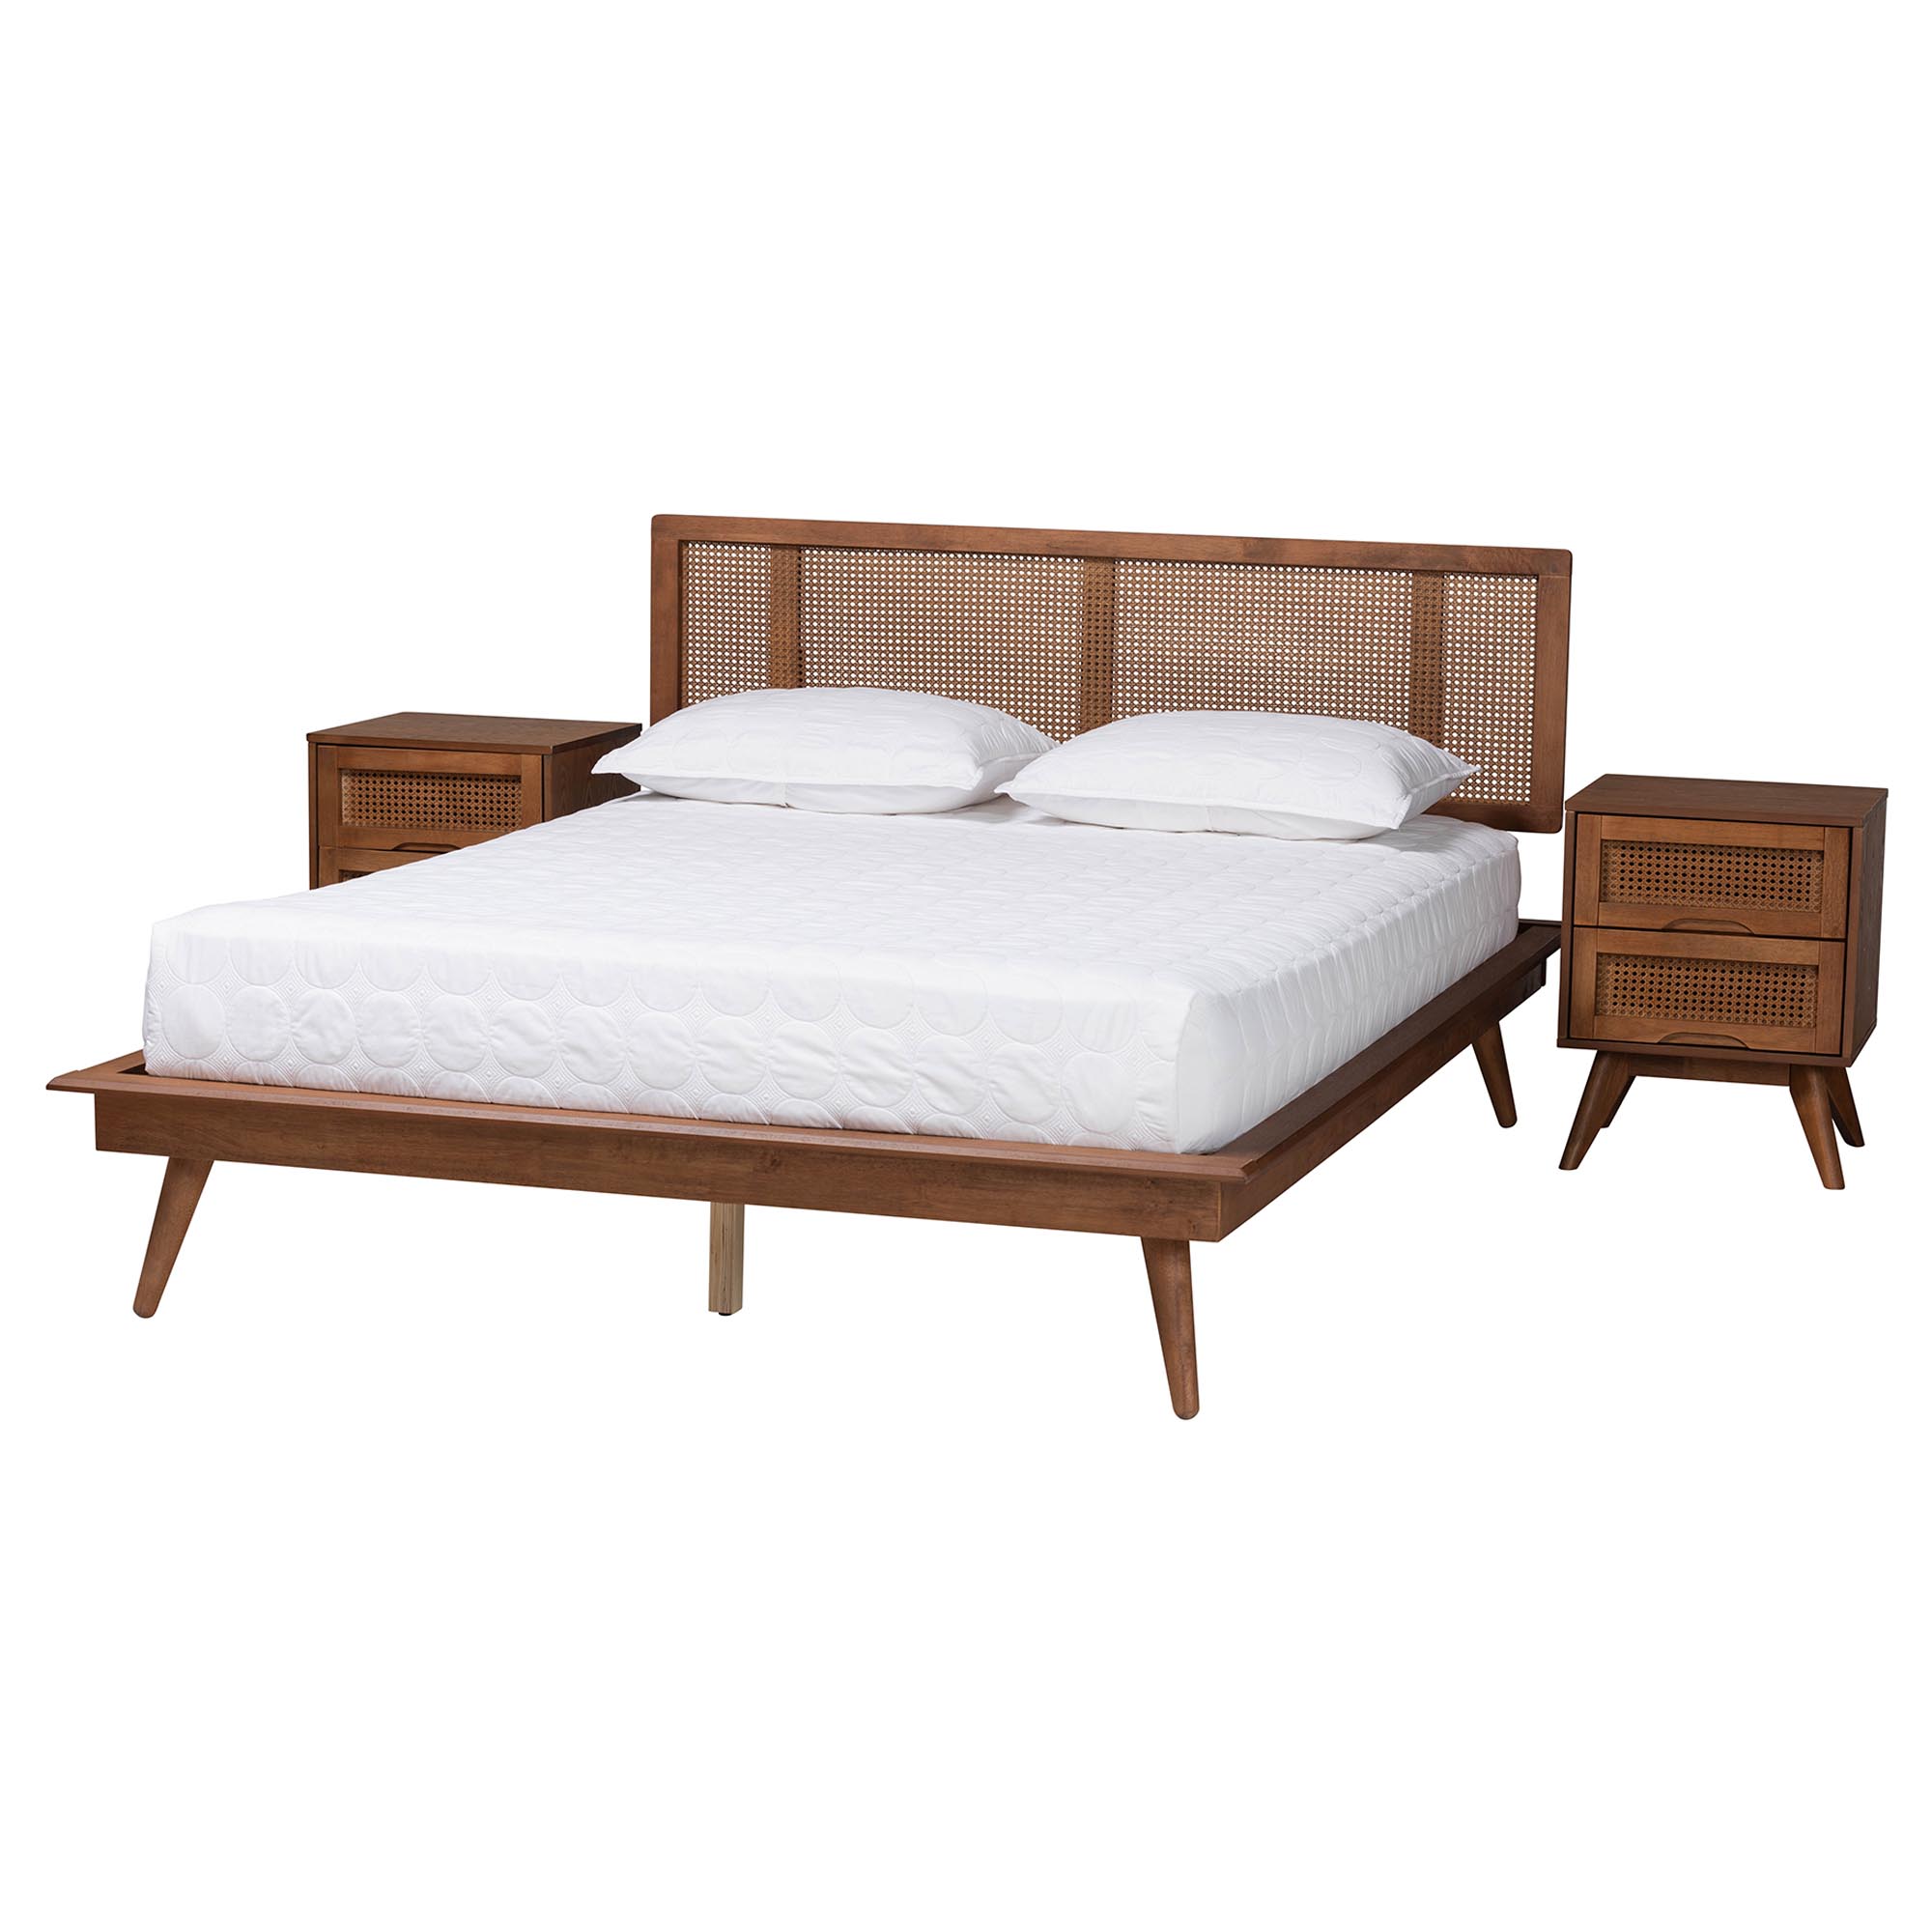 Baxton Studio Nura Mid-Century Modern Walnut Brown Finished Wood and Rattan Full Size 3-Piece Bedroom Set